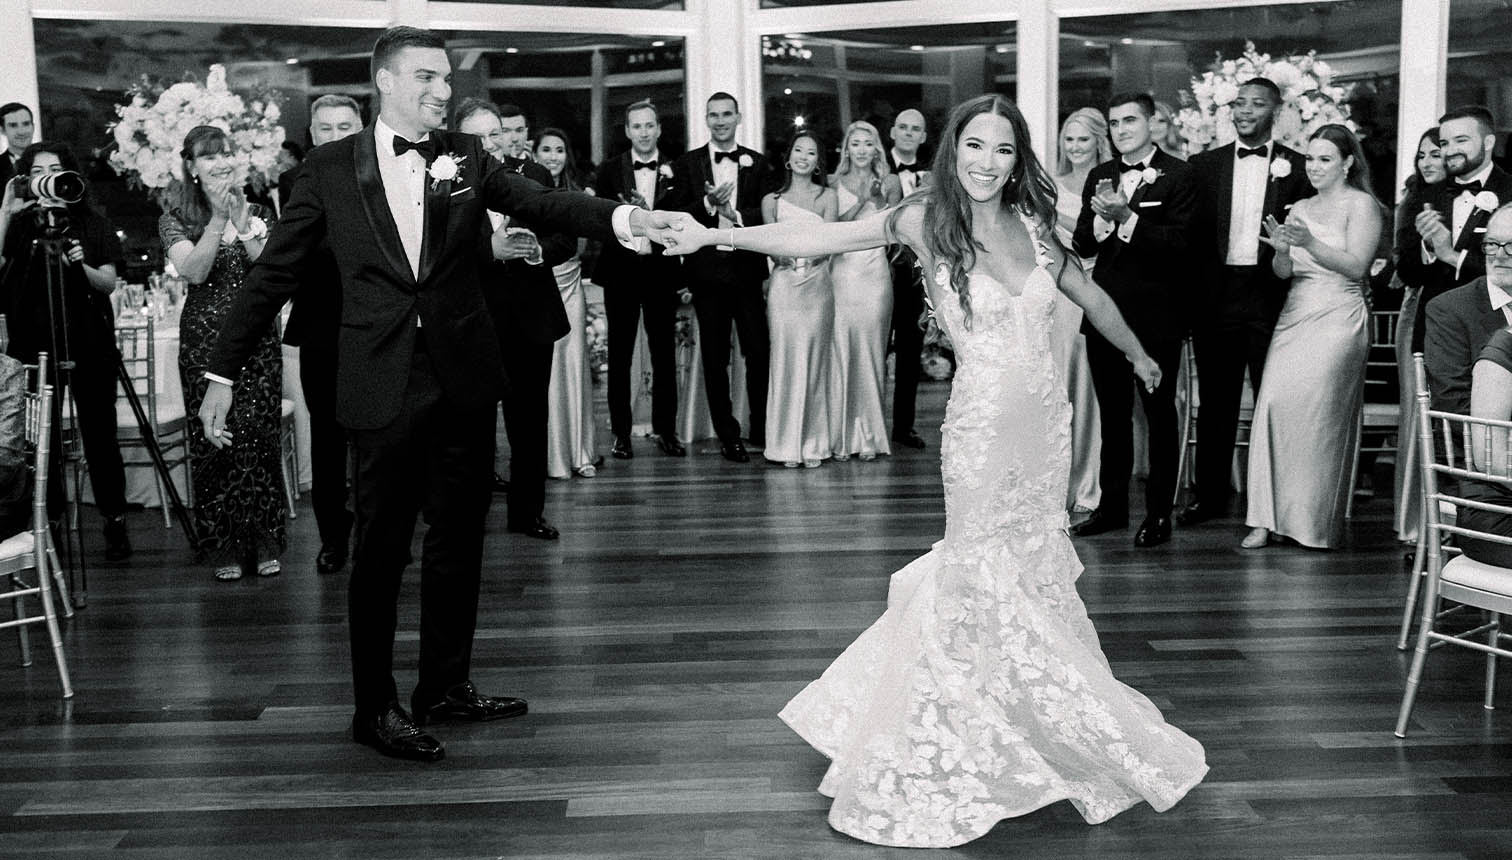 A wedding couple enjoy their first dance as Boston Premier plays their favorite song.